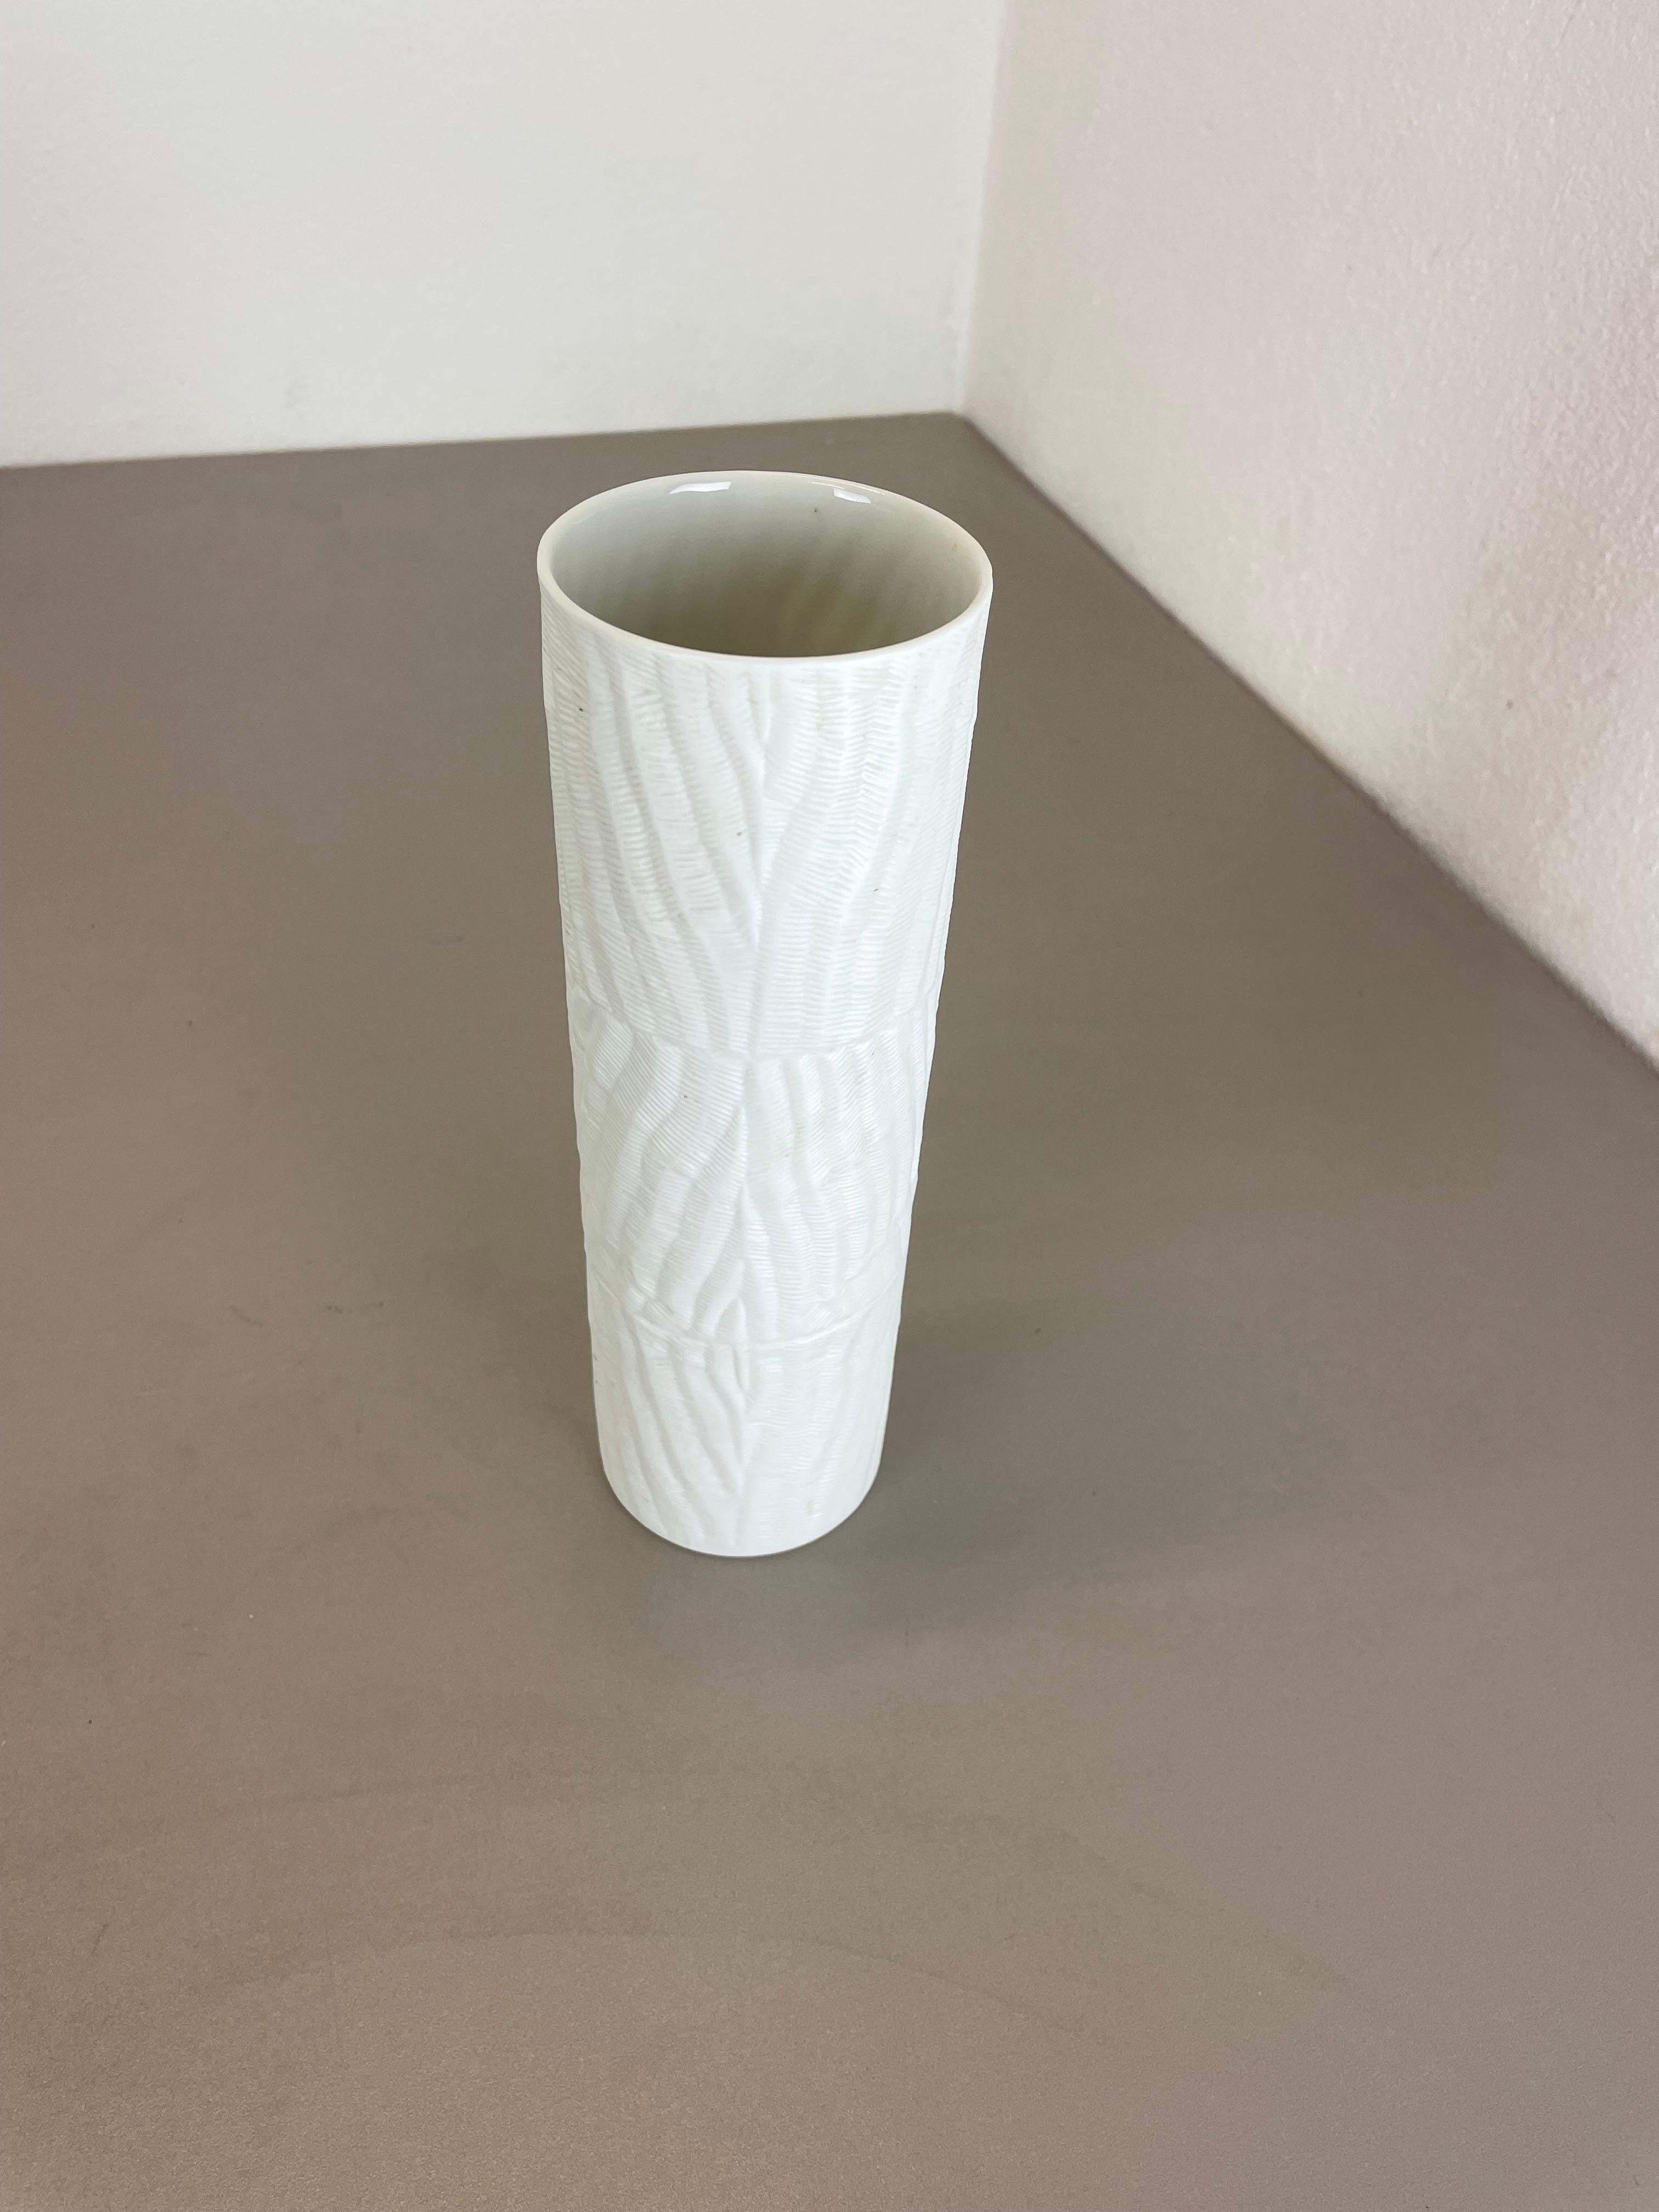 Large 23cm OP Art Vase Porcelain Vase by Martin Freyer for Rosenthal, Germany In Good Condition For Sale In Kirchlengern, DE